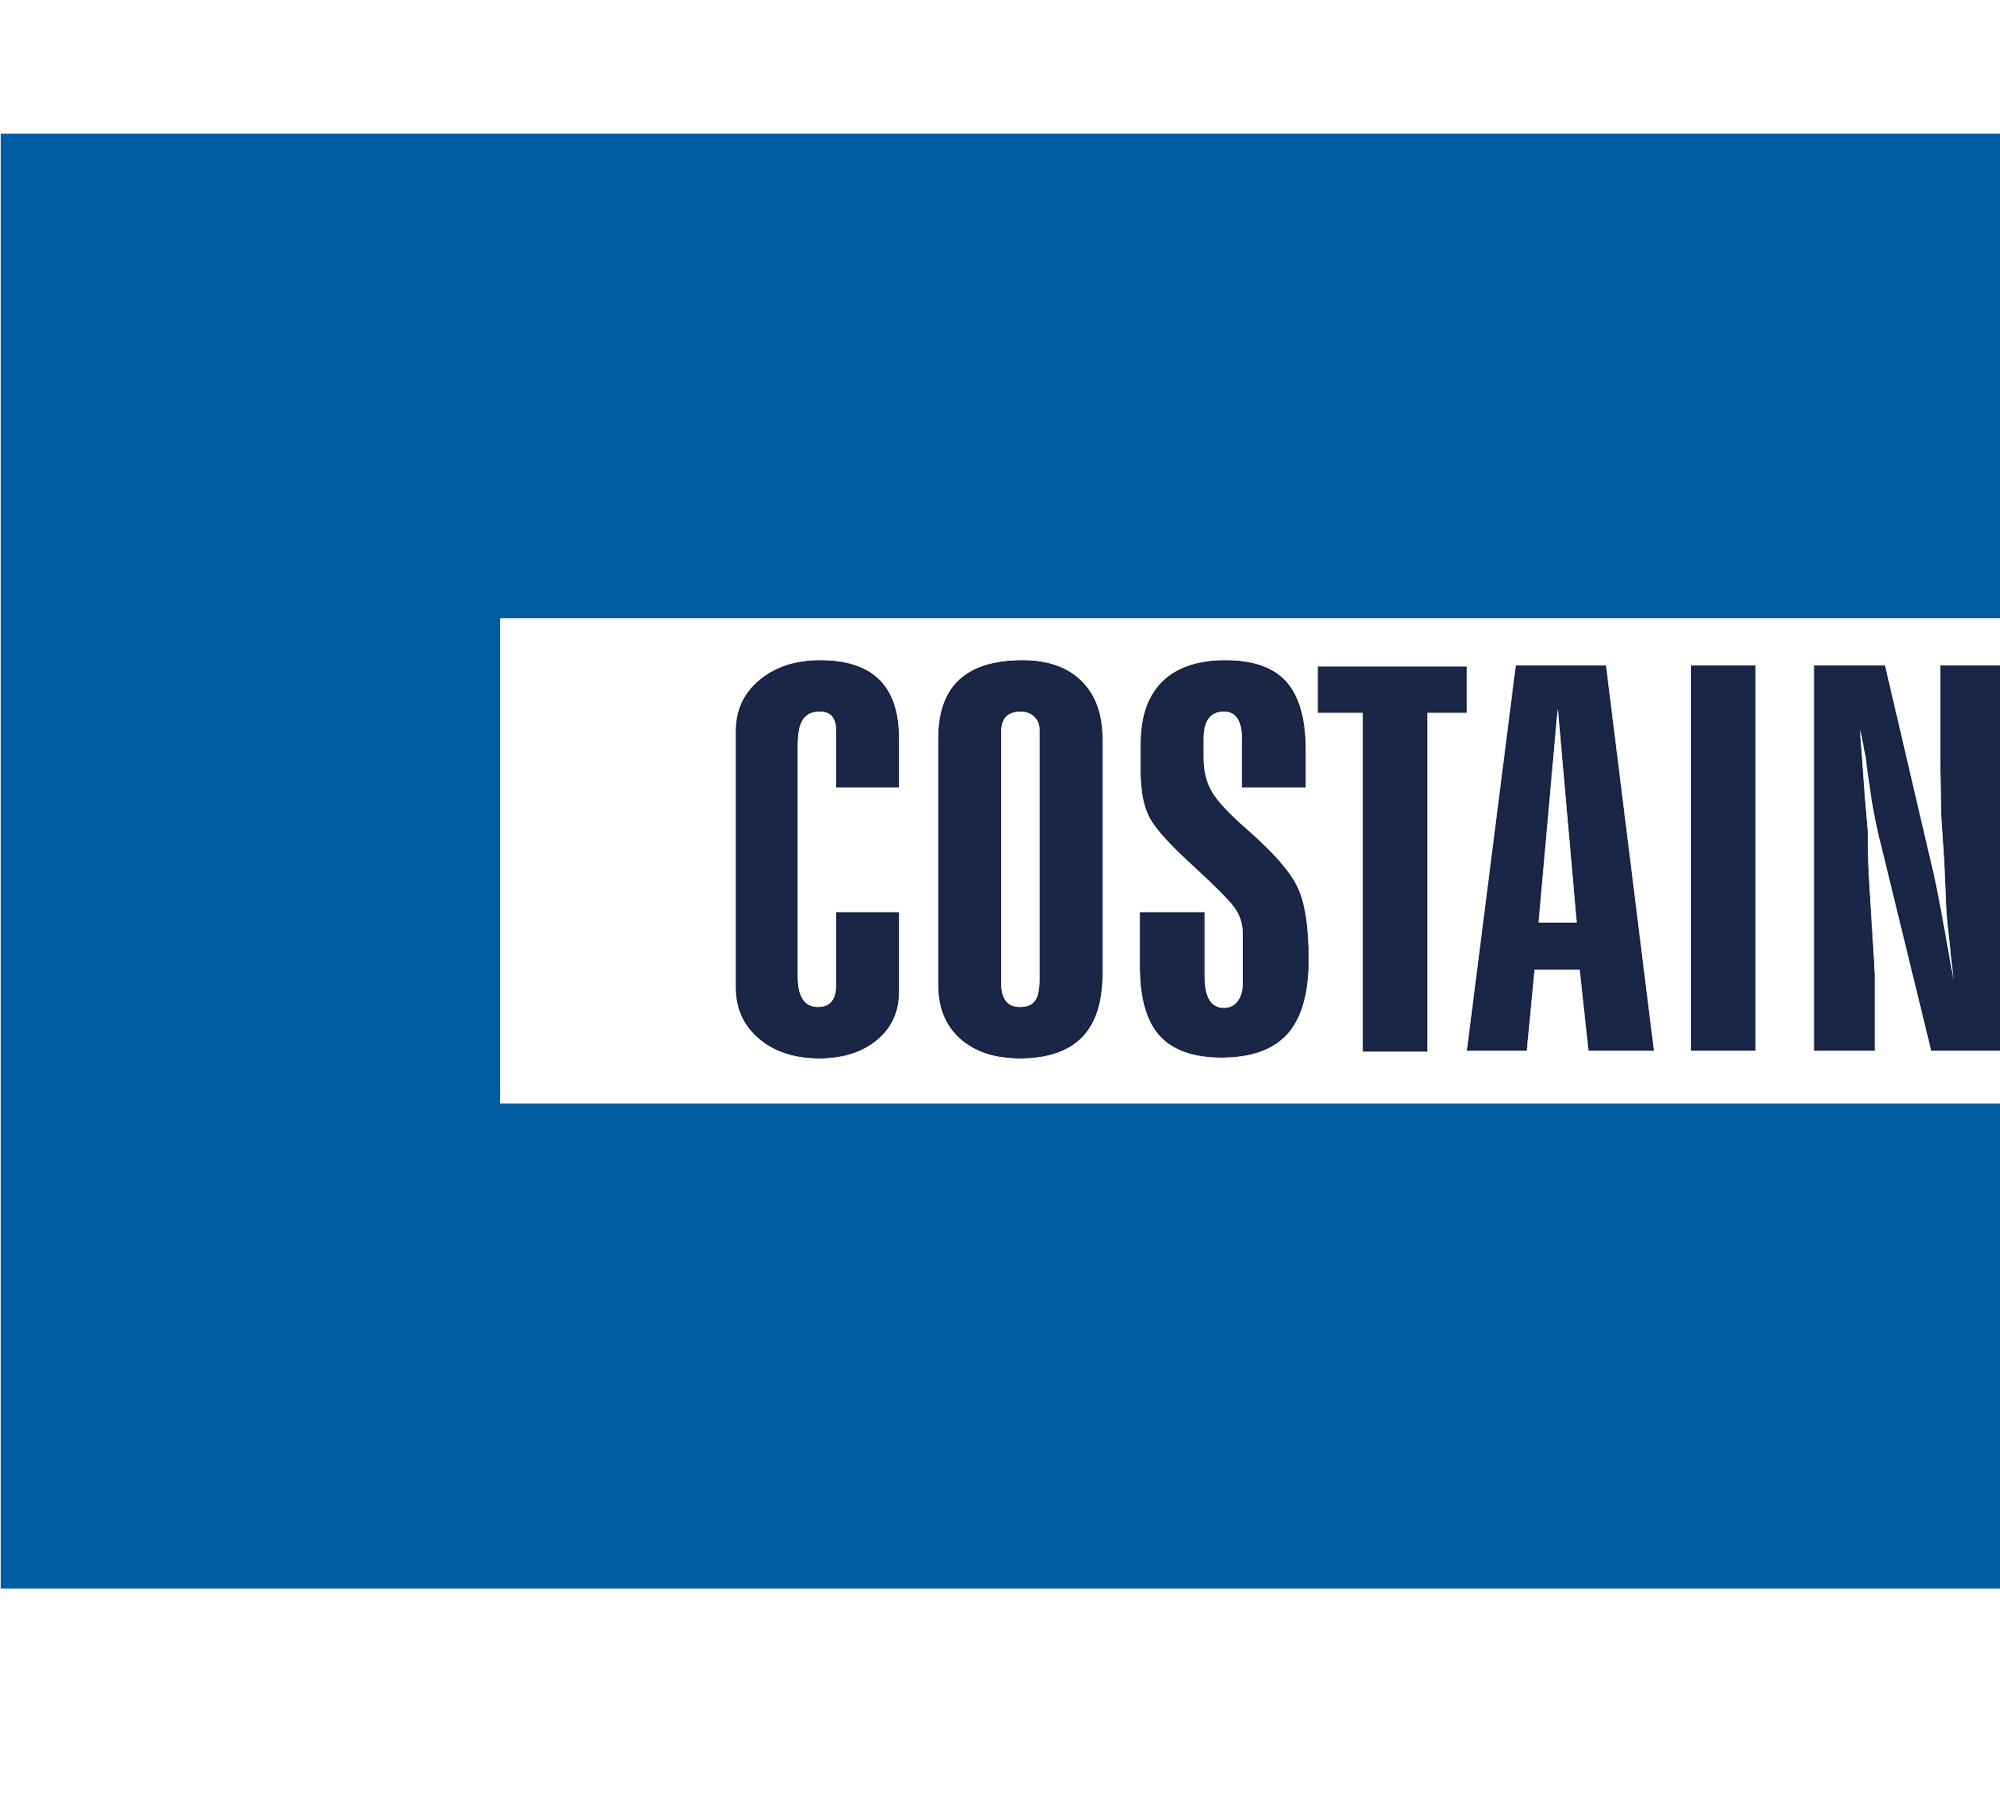 Costain Logo